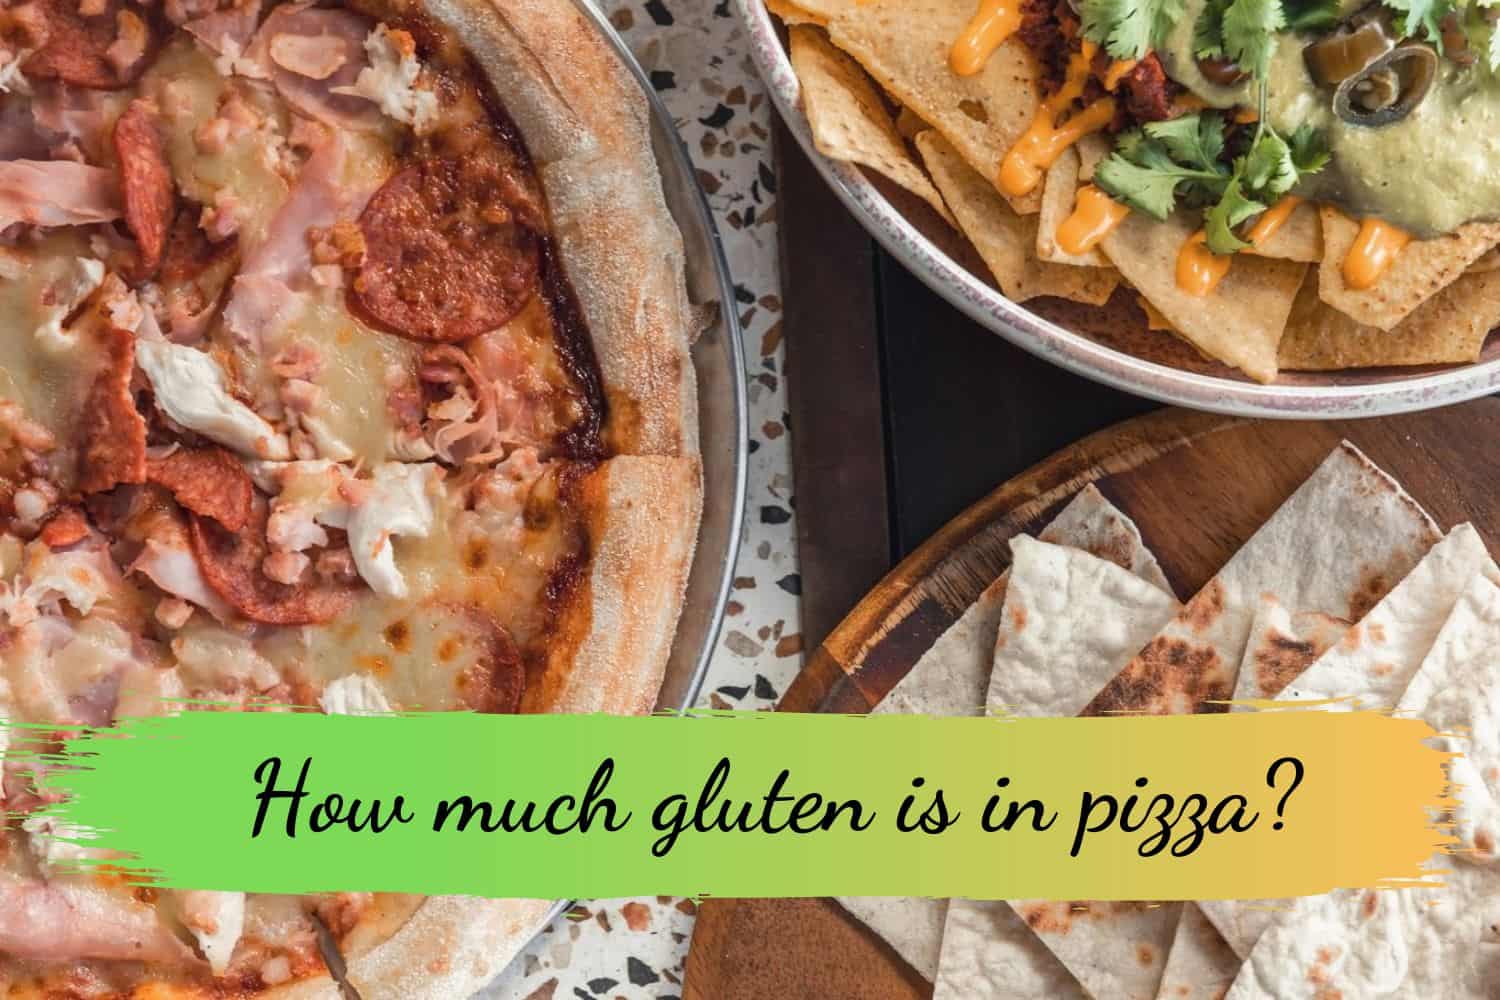 How much gluten is in pizza?